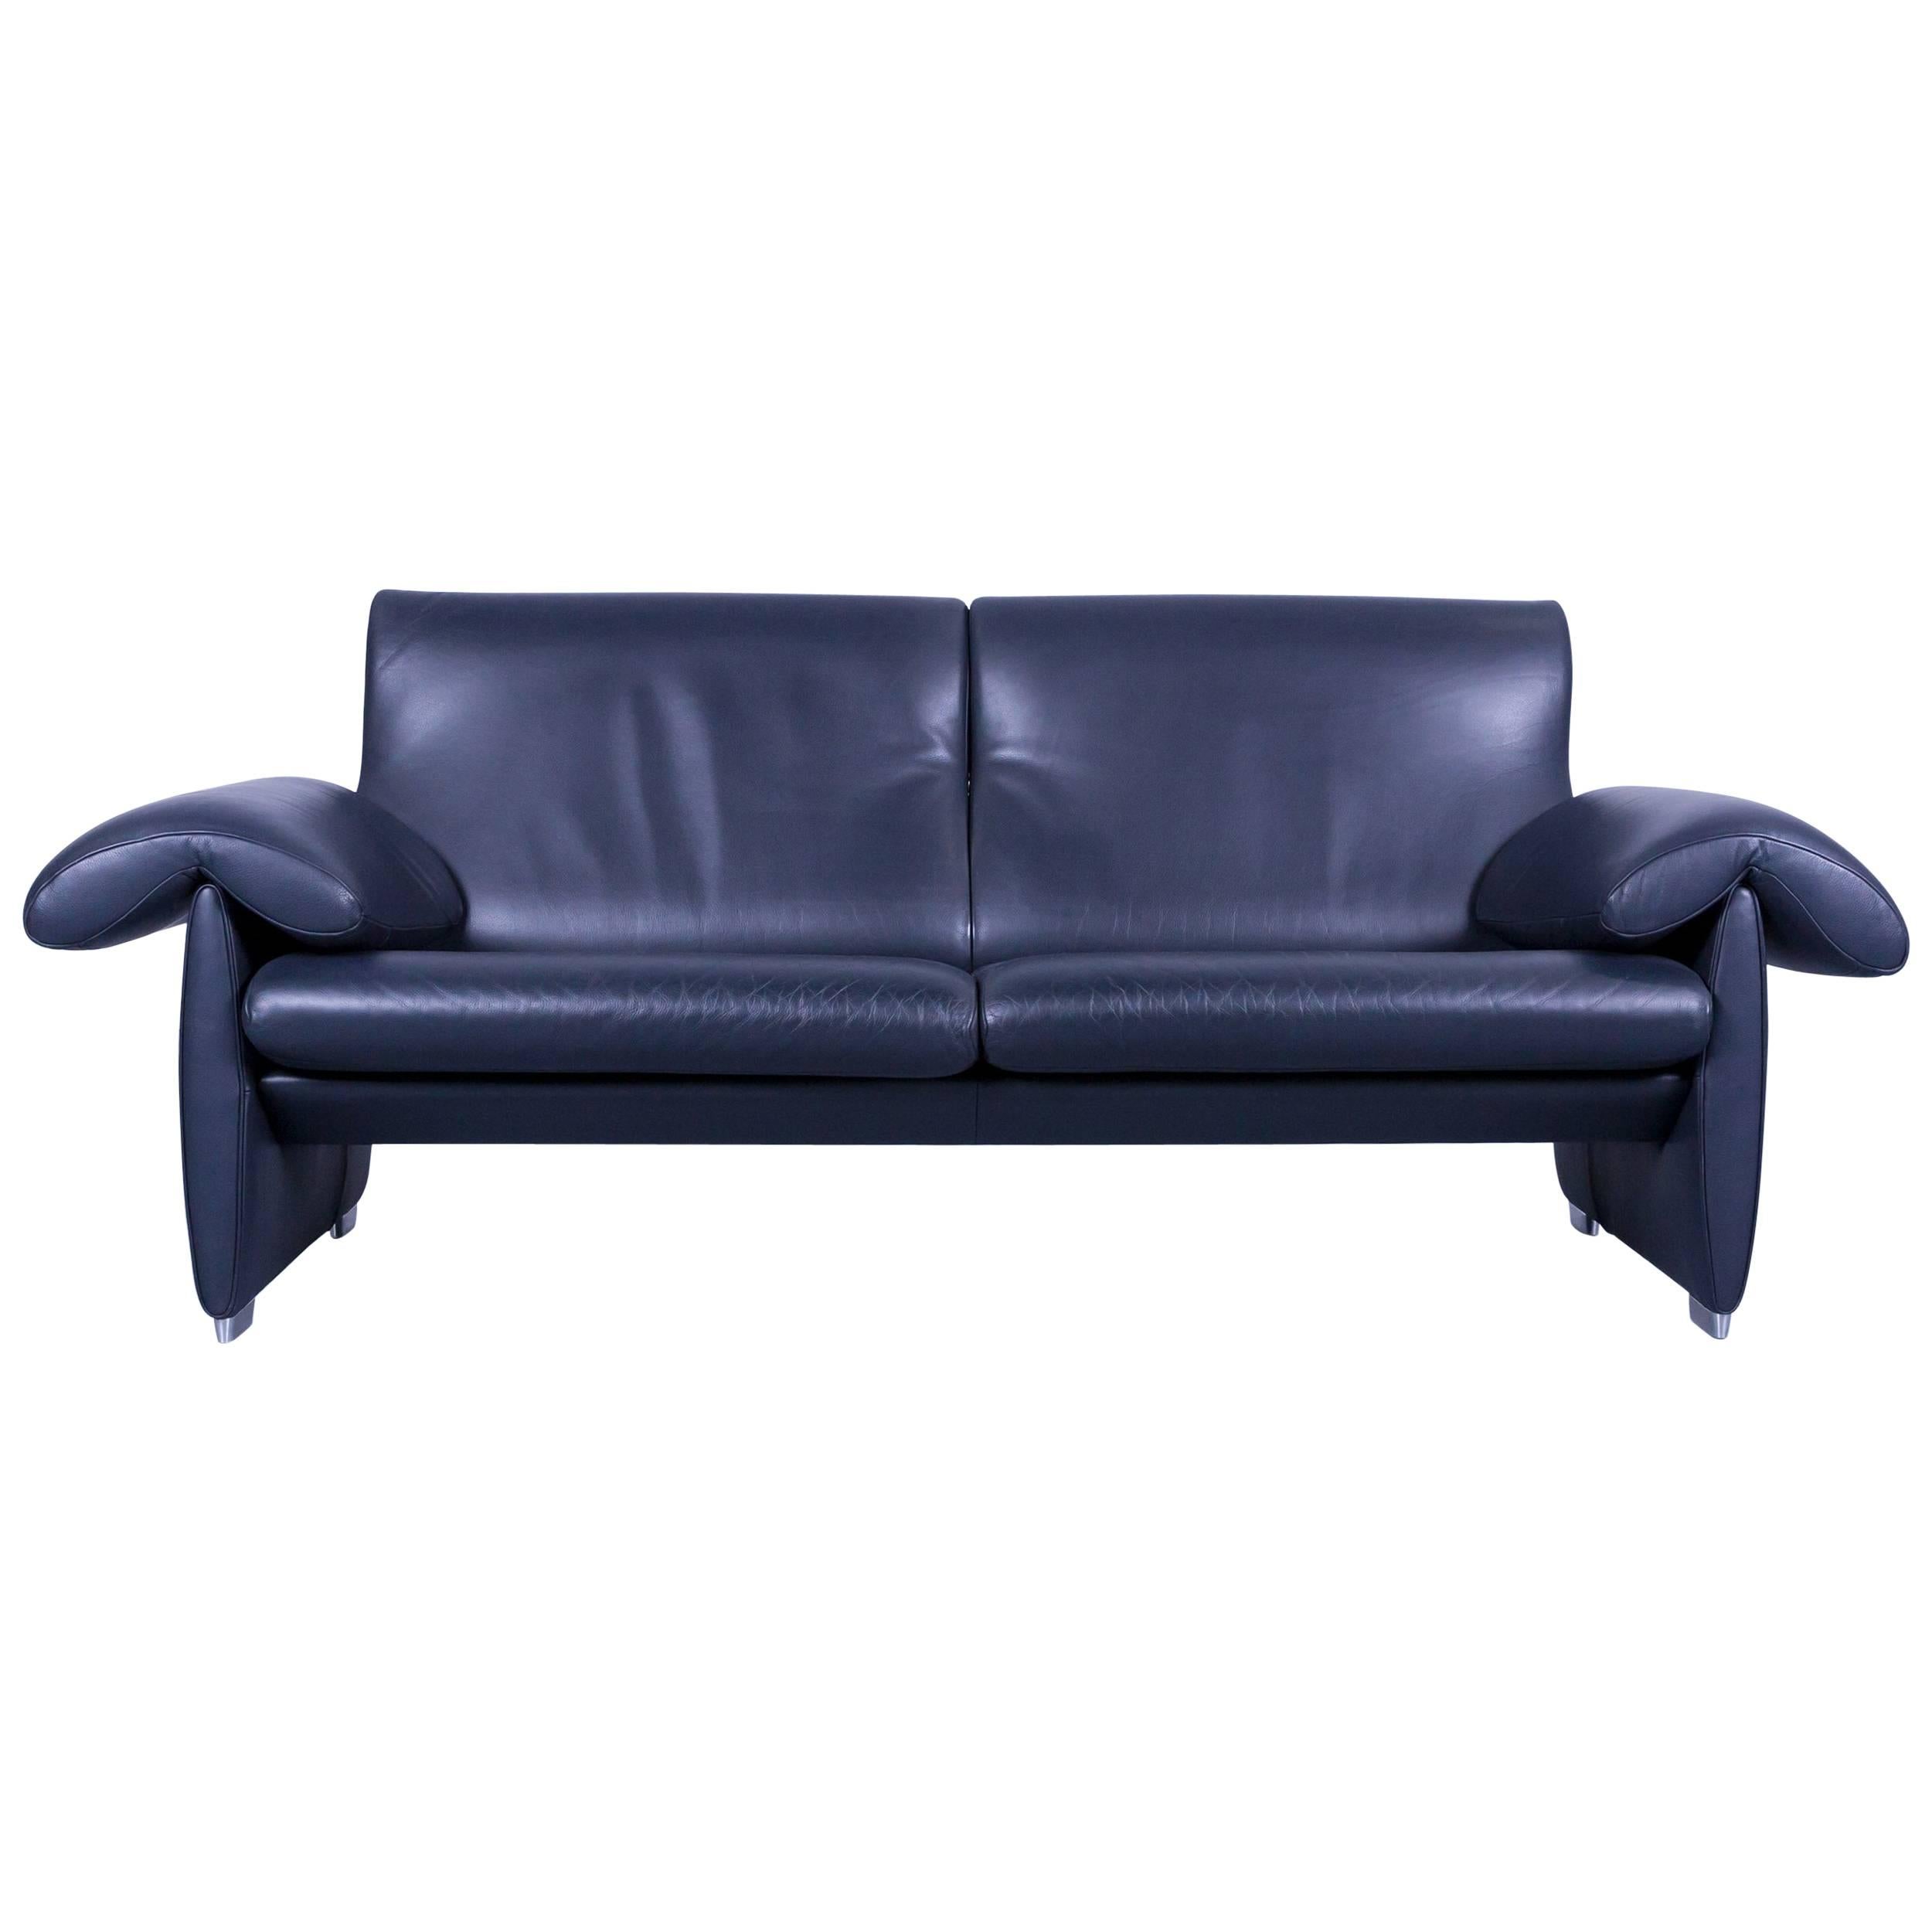 De Sede DS 10 Designer Sofa Navy Blue Leather Three-Seat Couch Switzerland